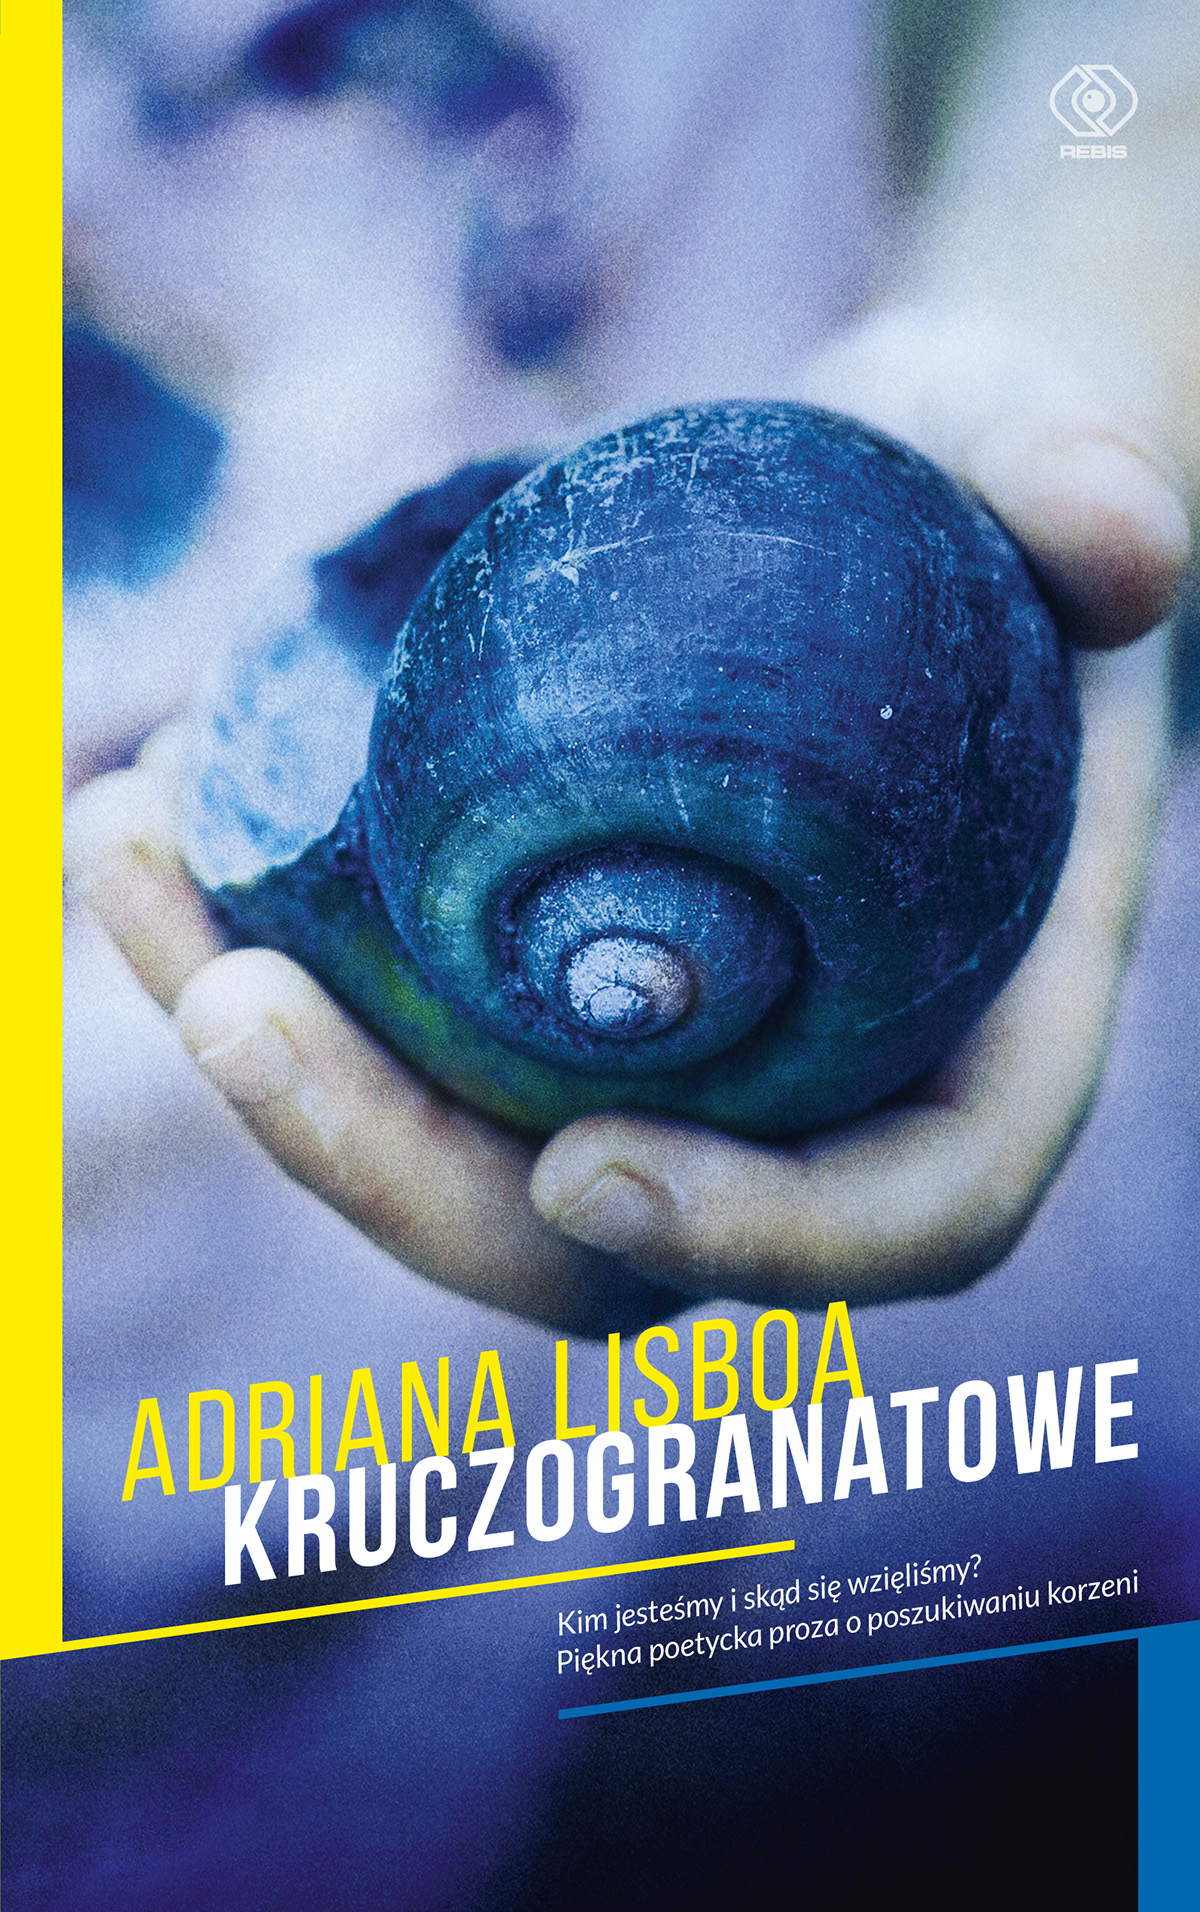 "Kruczogranatowe",  Adriana Lisboi